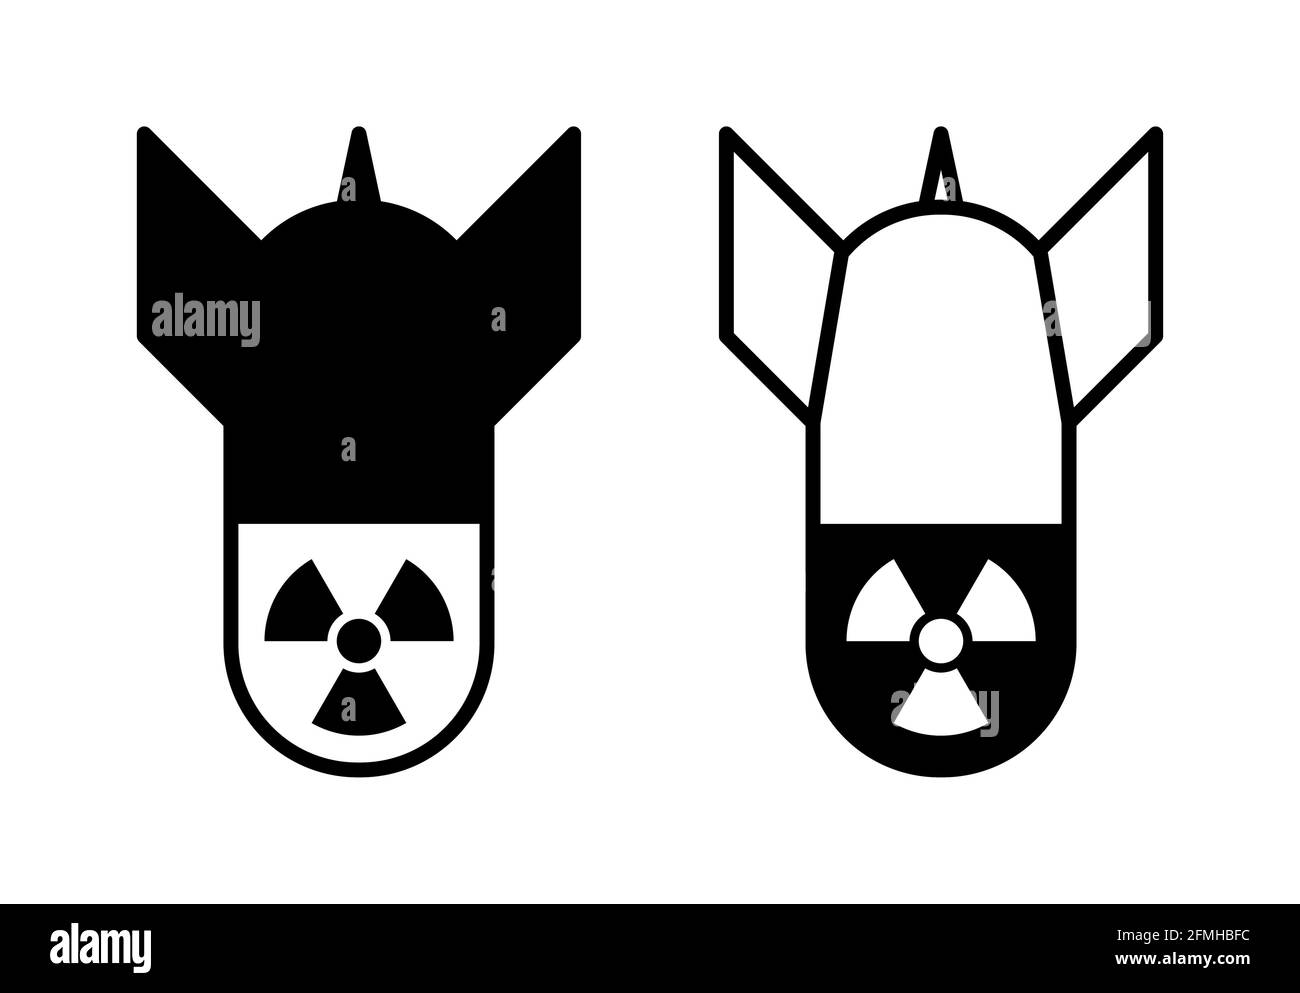 Symbolsatz für Atombombe oder Atomwaffe. Vektorbild. Stock Vektor